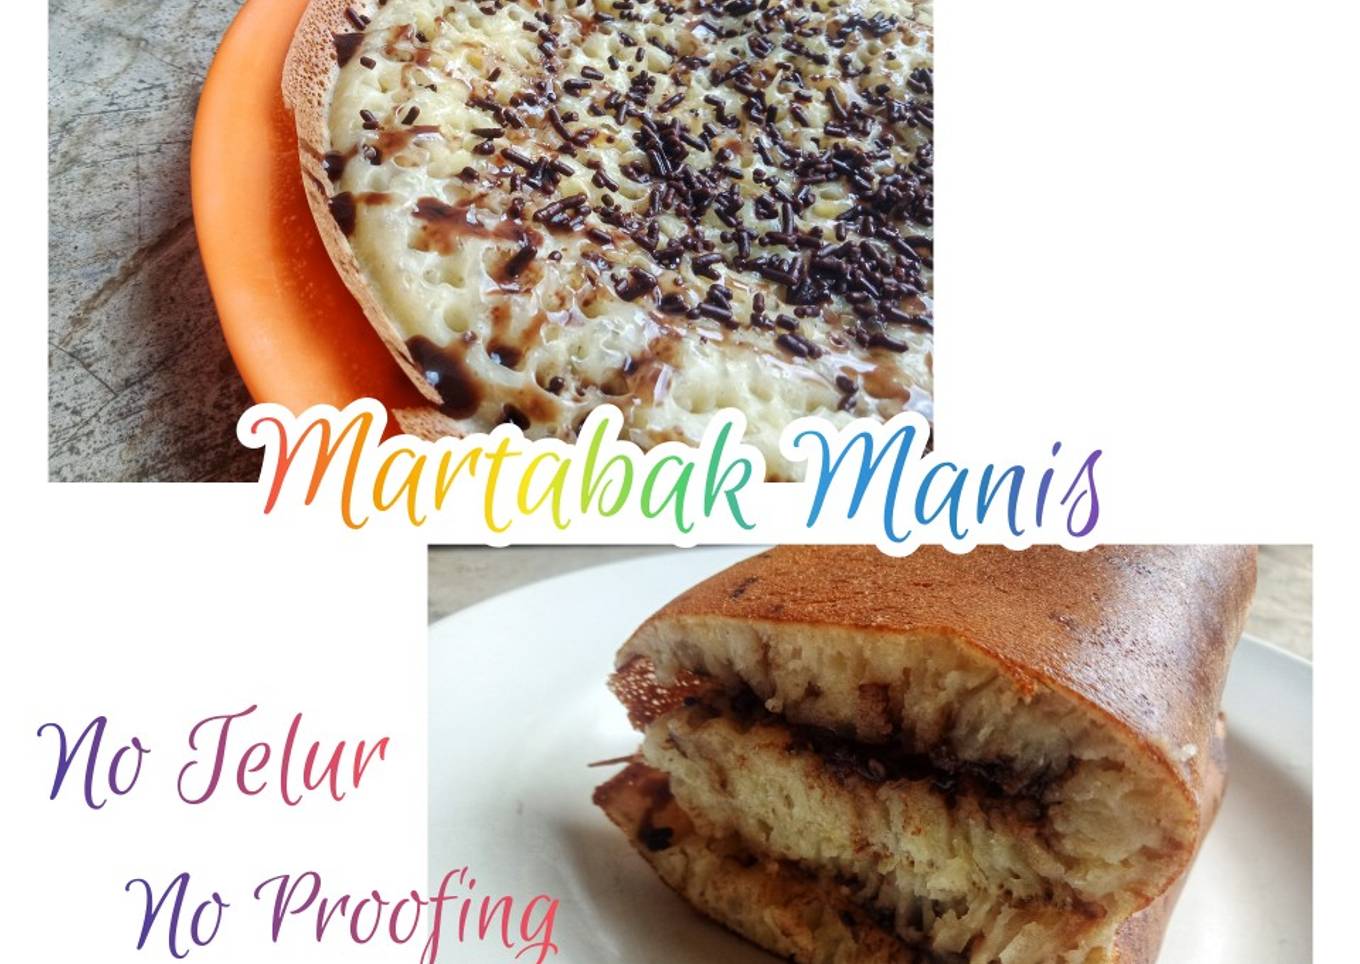 Martabak Manis Ekonomis No Telur No Proofing - resep kuliner nusantara